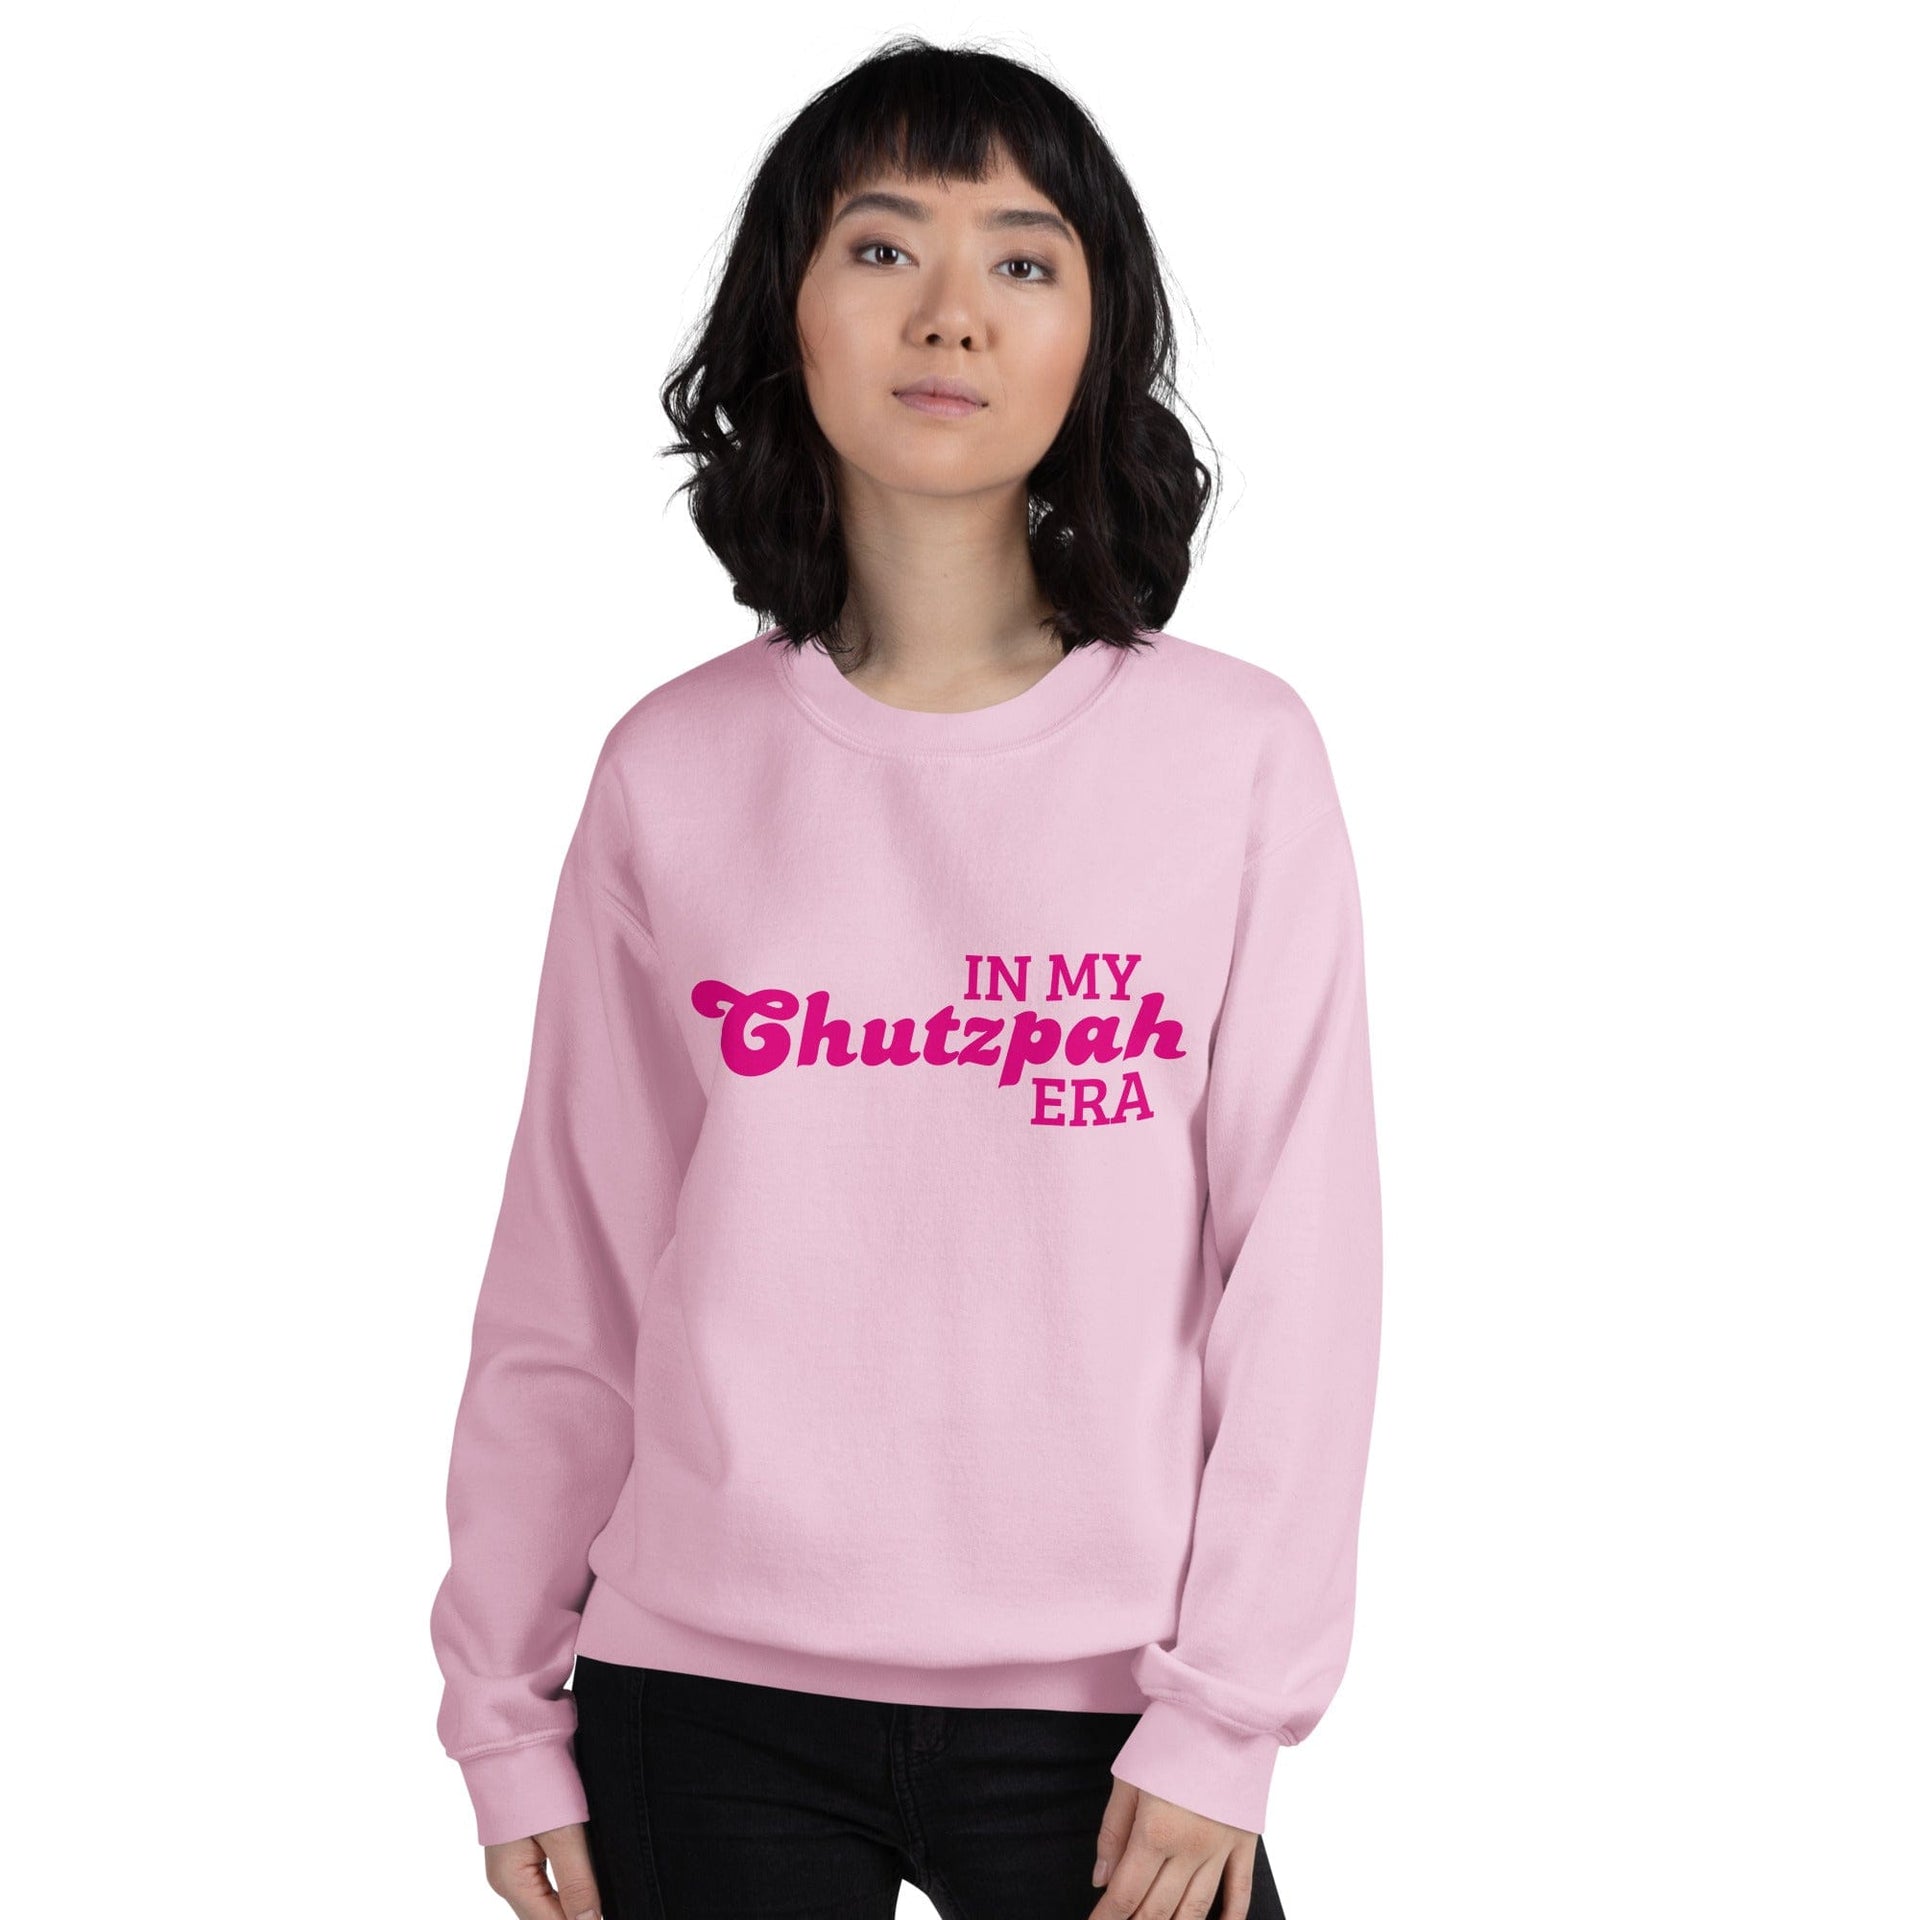 ModernTribe Chutzpah Era Sweatshirt (Sizes S - 3XL)